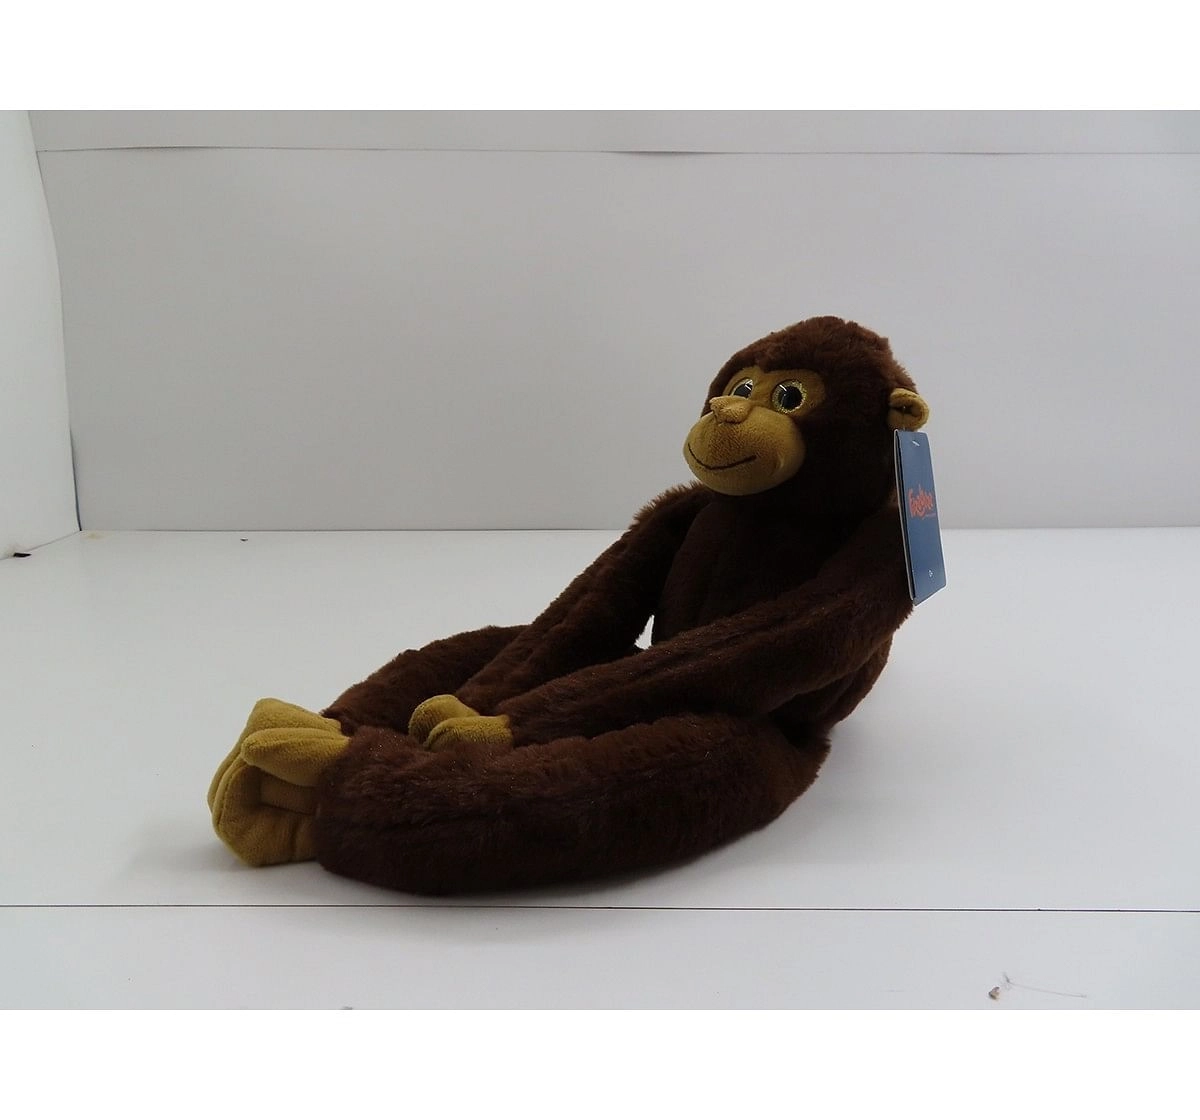 Fuzzbuzz Monkey Animal Plush - Black - 61Cm Quirky Soft Toys for Kids age 0M+ - 12 Cm (Black)